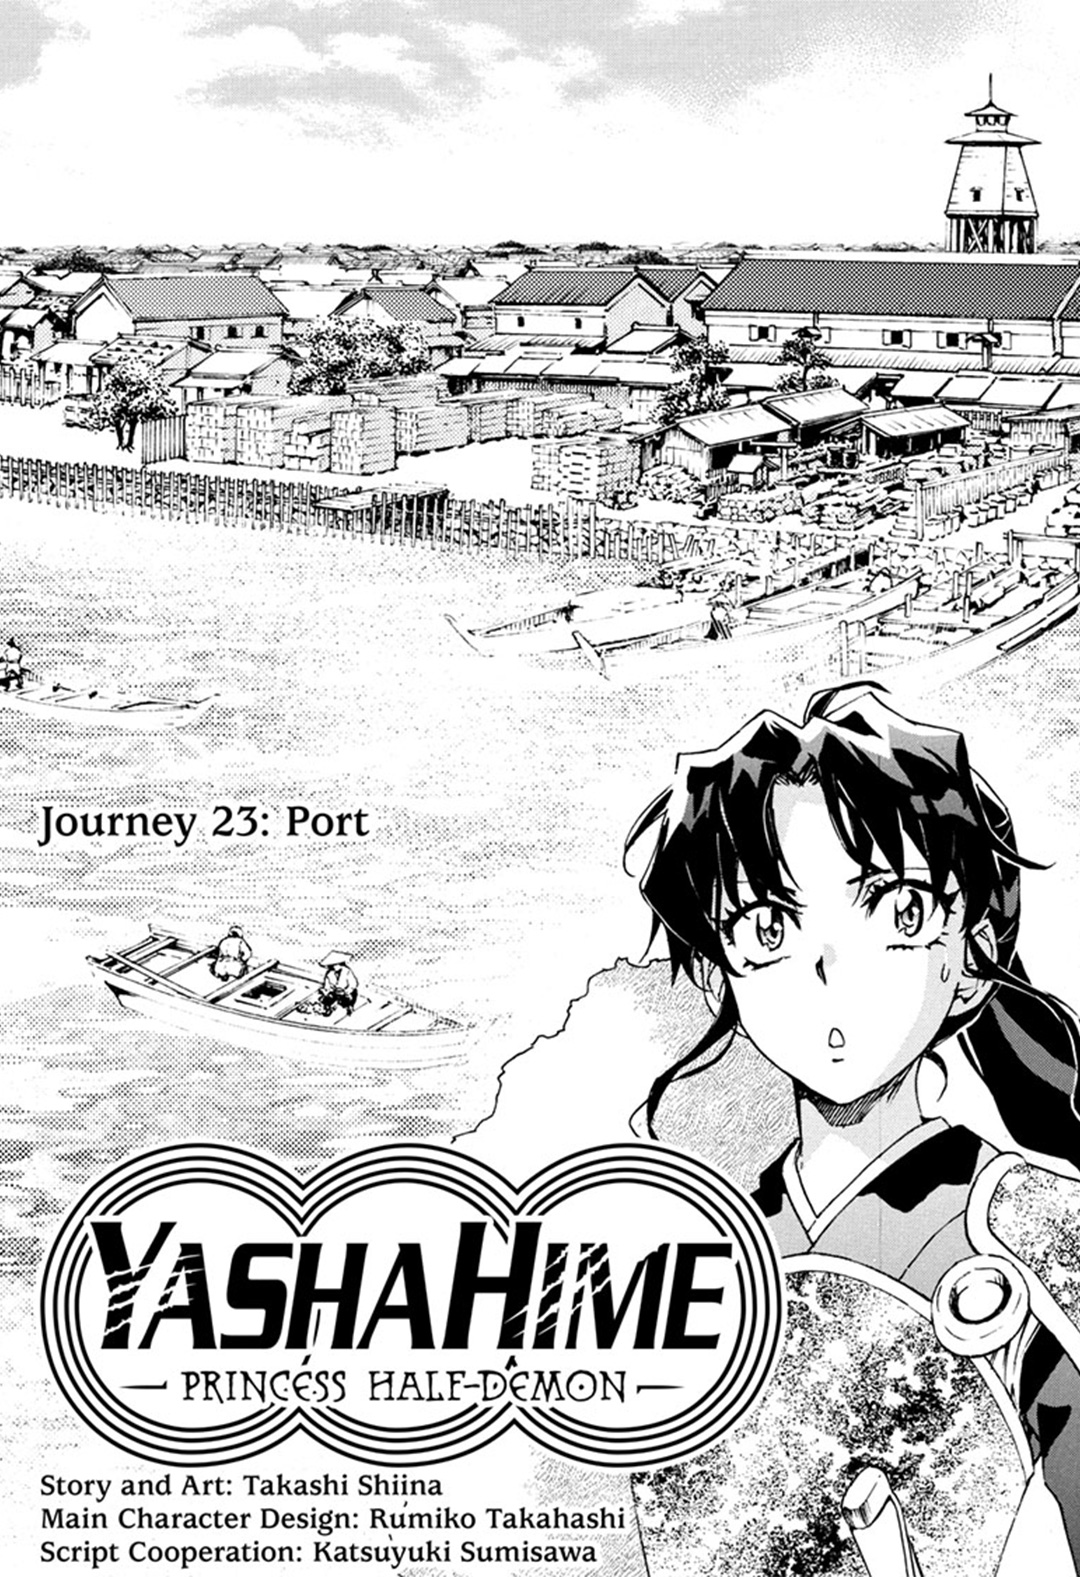 Yashahime: Princess Half-Demon, Vol. 2 (2) by Takashi Shiina